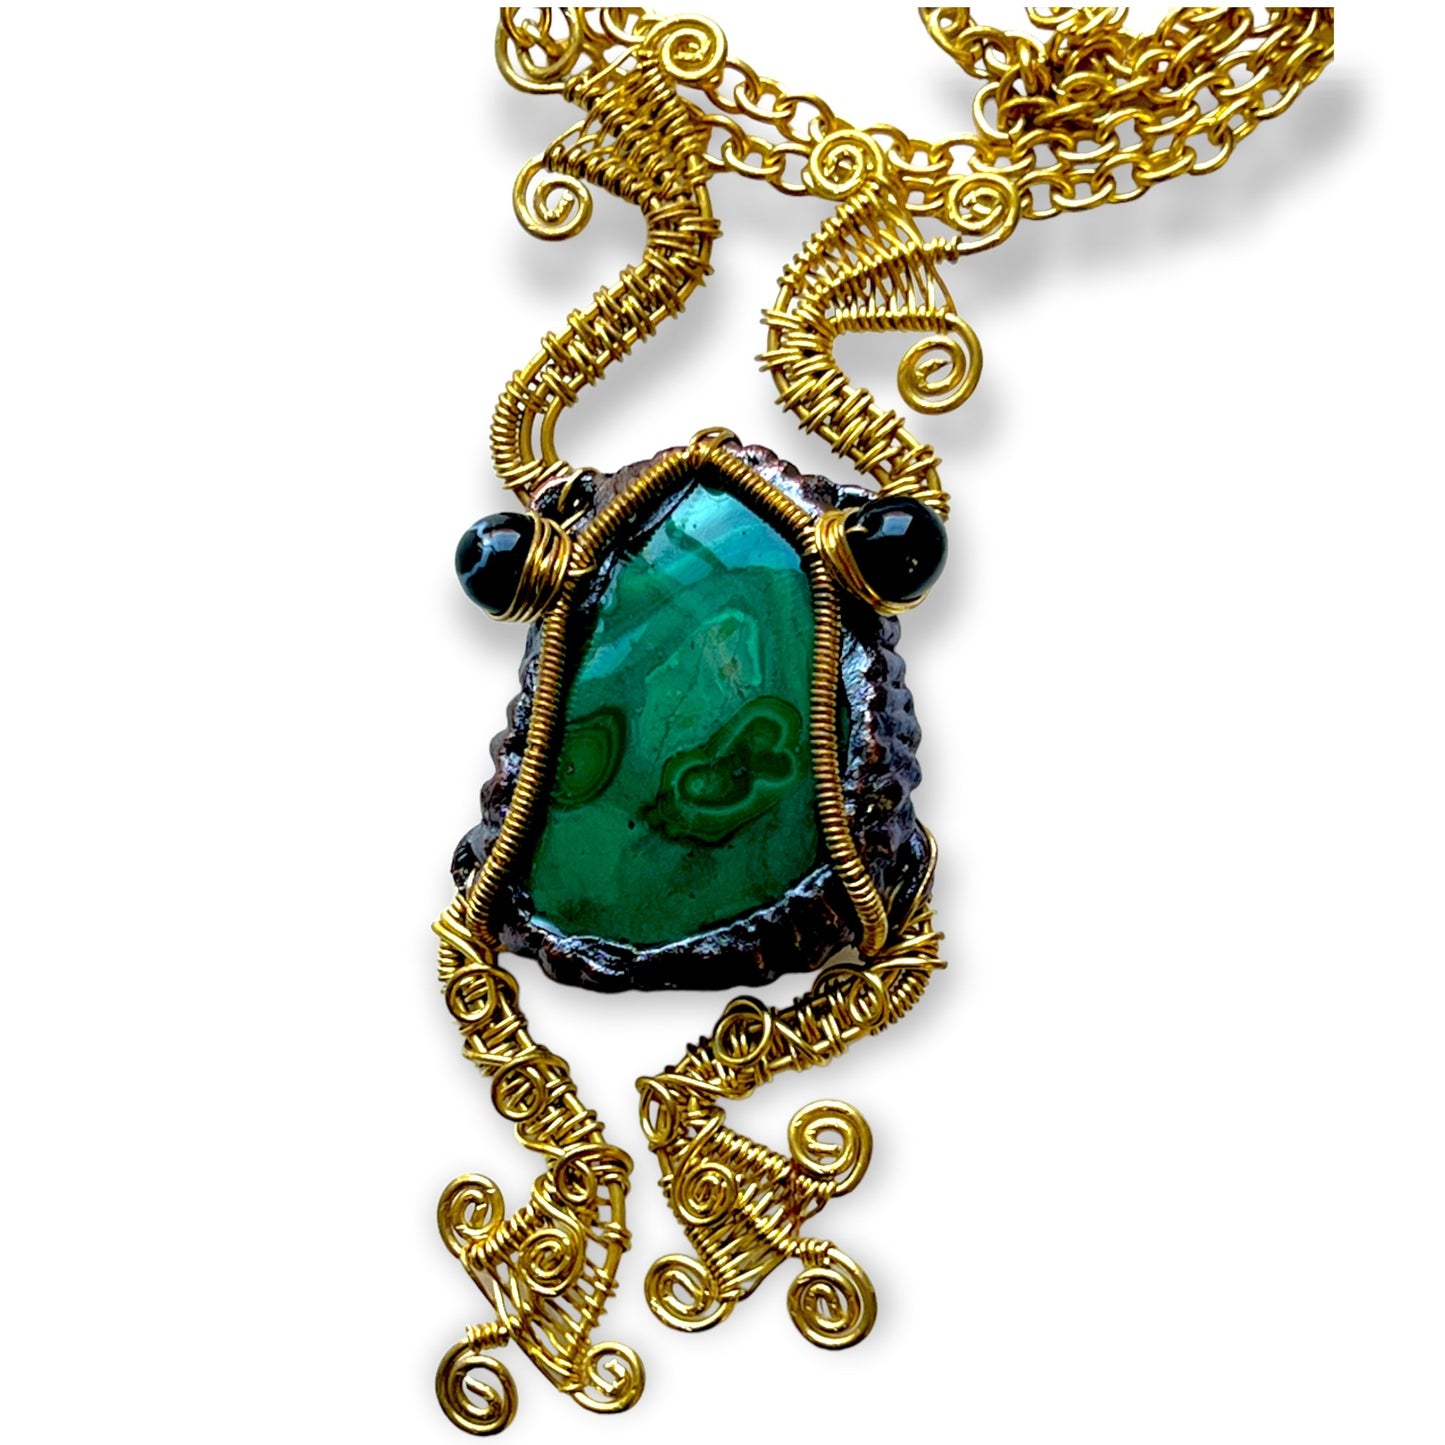 Malachite prince pendant necklace with chain - Sundara Joon